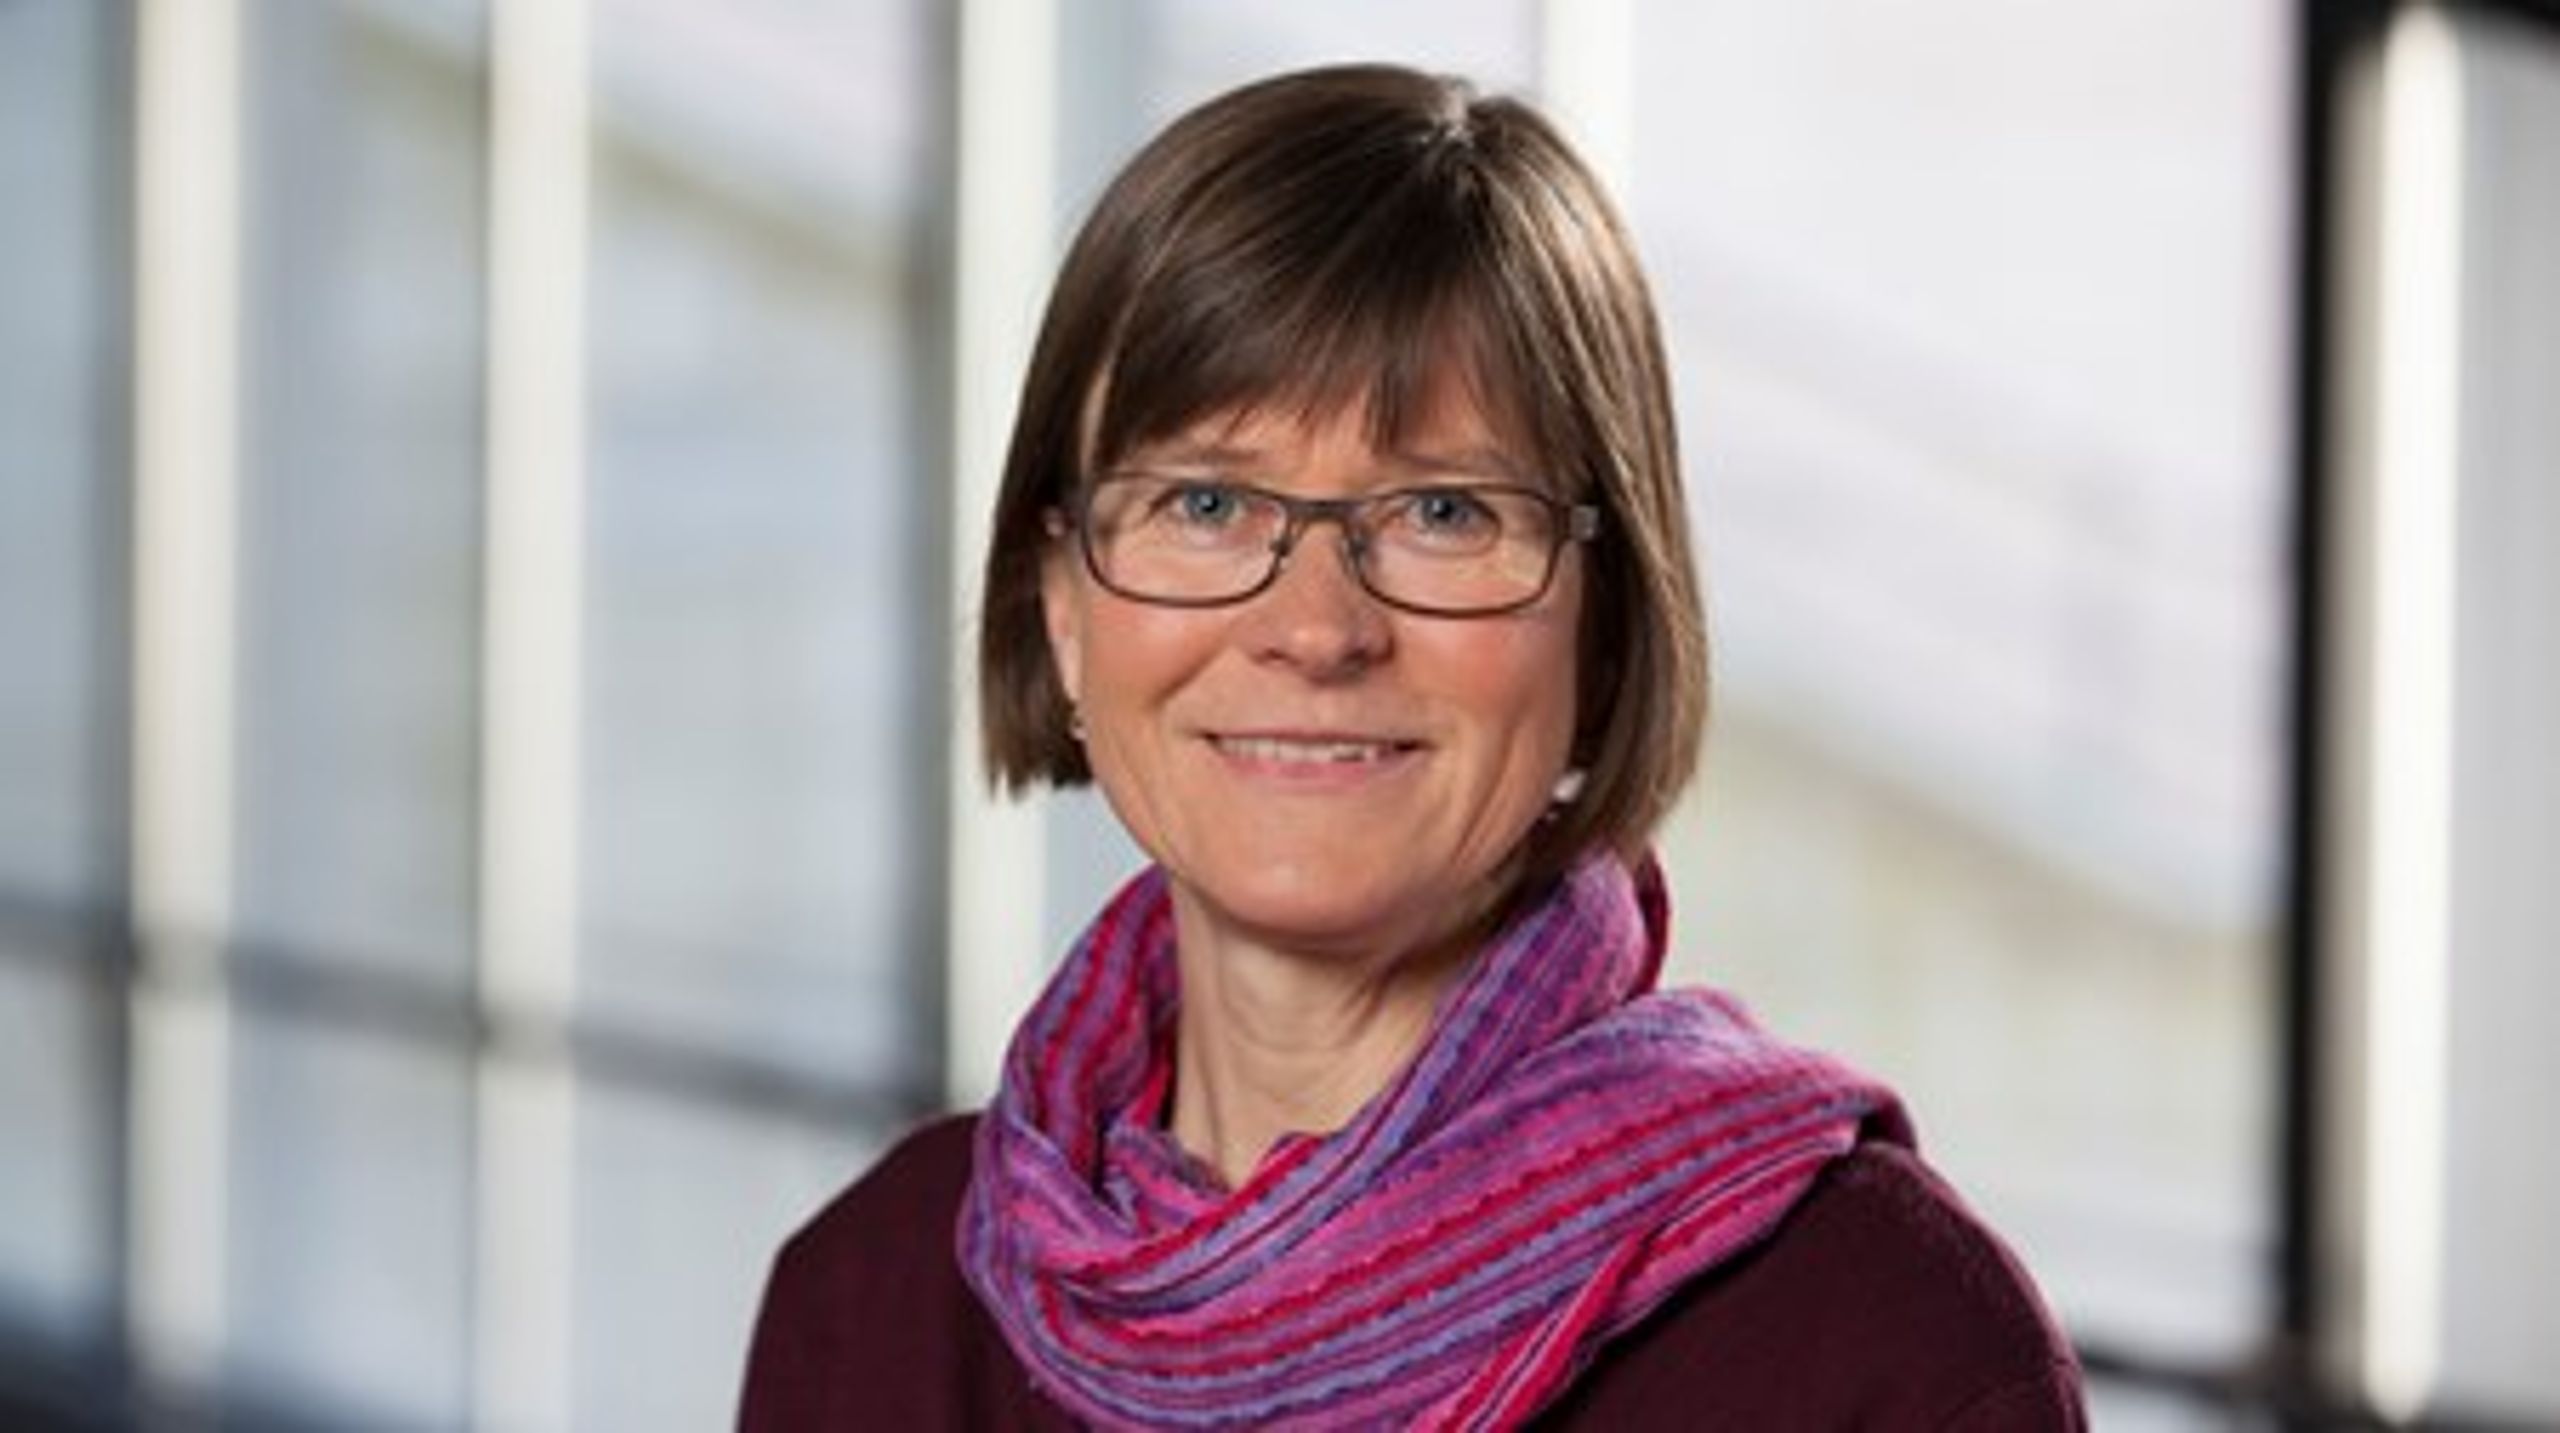 Karin Pleijel, MP